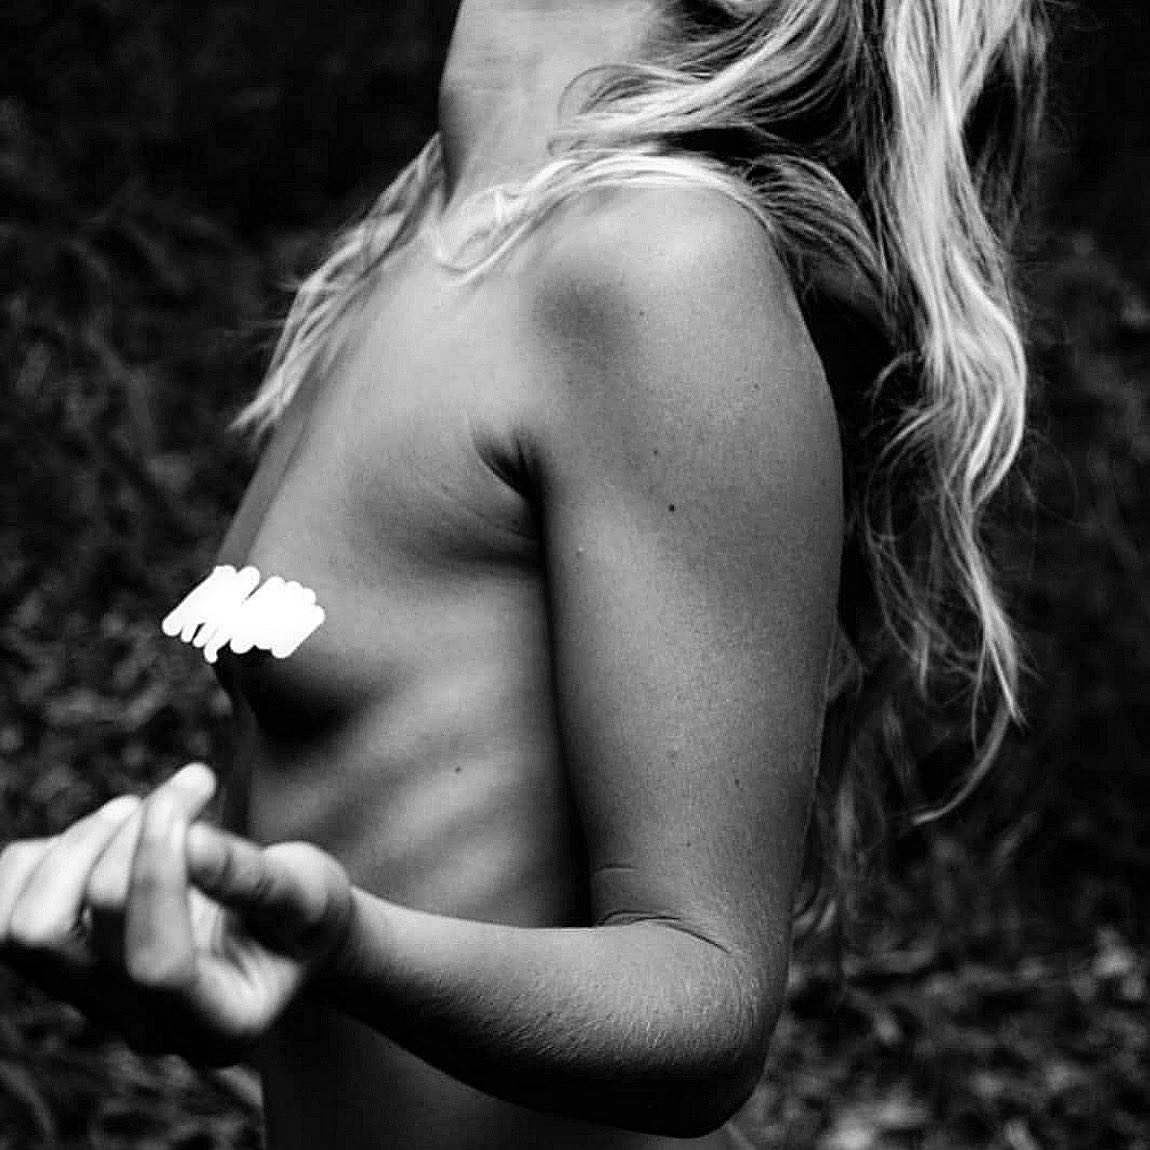 .

.

.

.

.

.

#tanned #blonde #bushwalk #bush #nature #naturism #art #photography